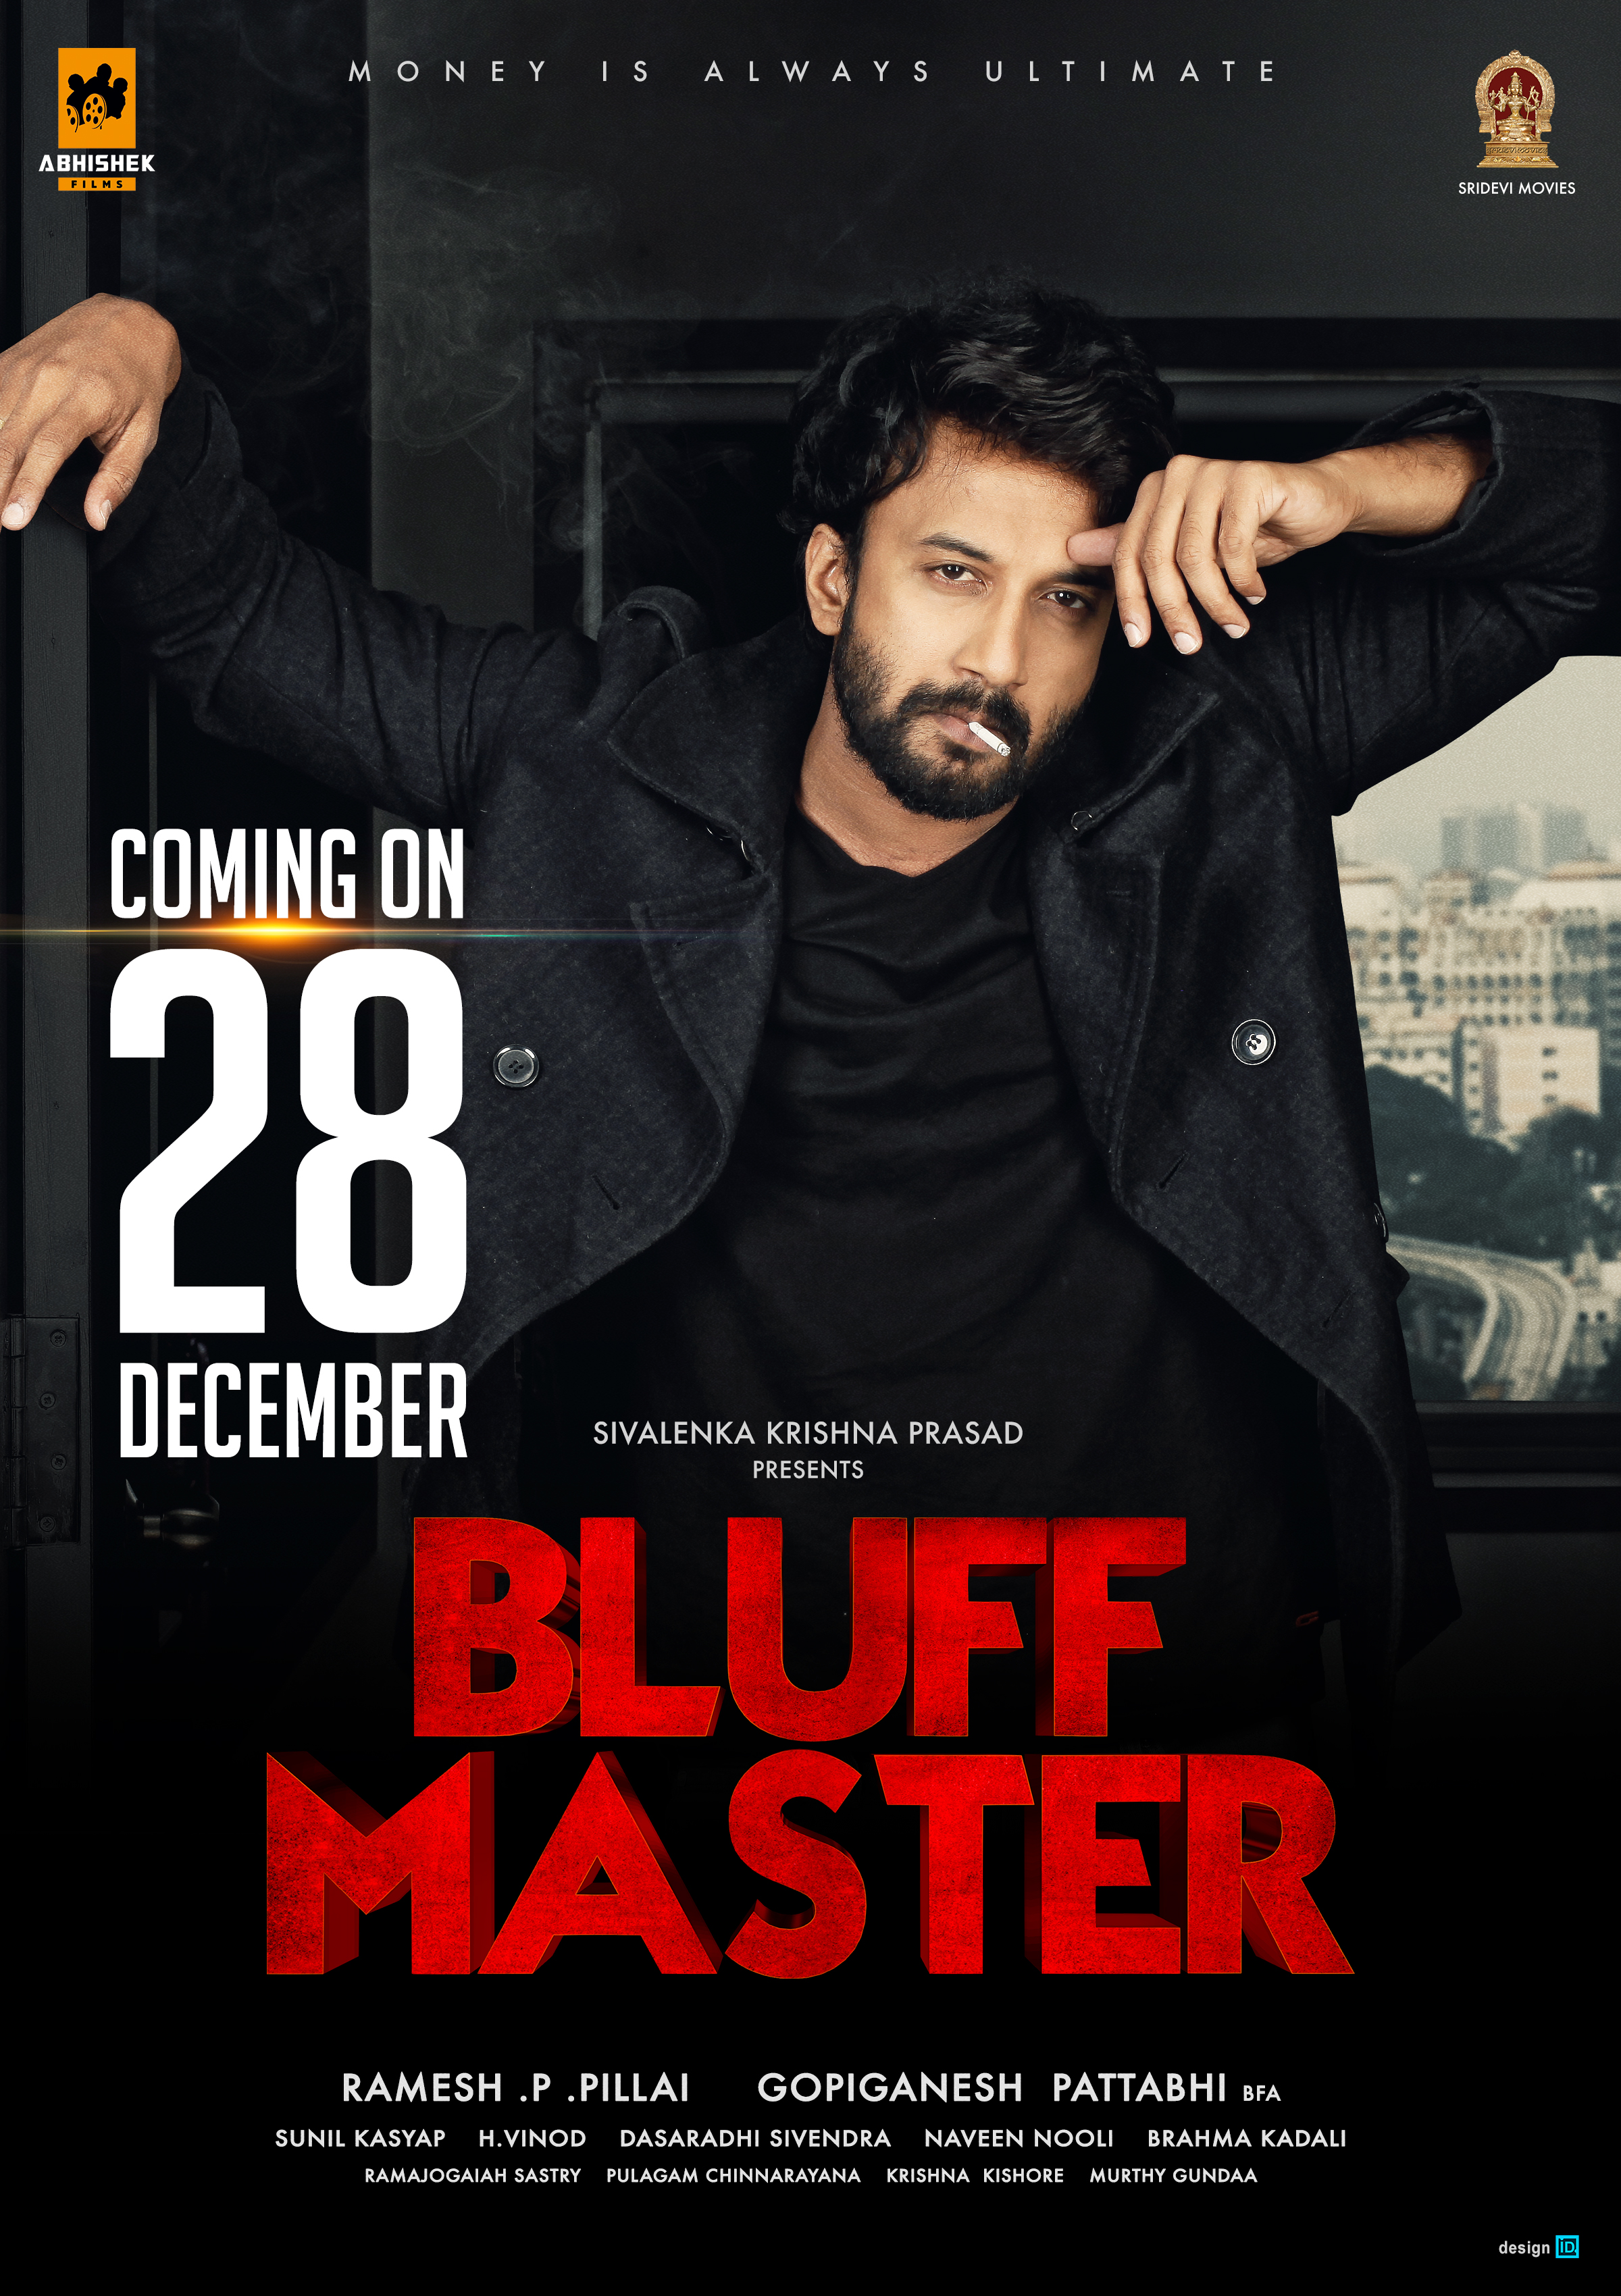 Bluff Master 2018 Hindi Dual Audio 500MB HDRip 480p Free Download